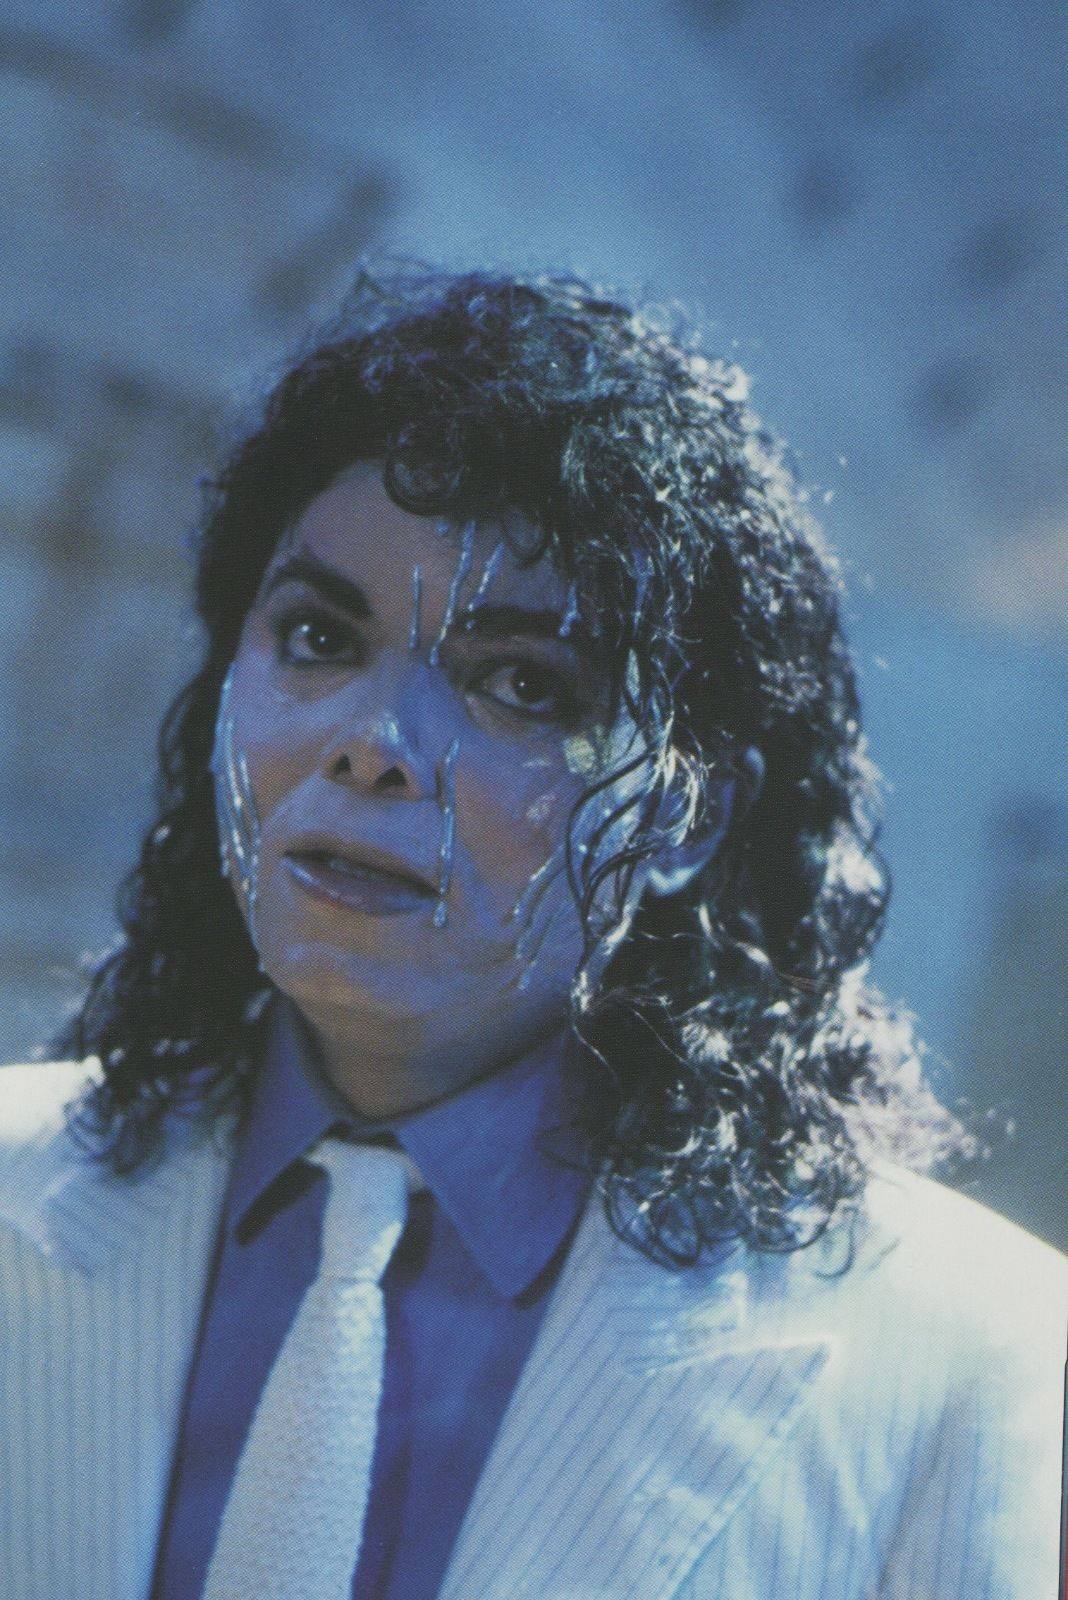 Michael jackson moonwalker. Michael Jackson Moonwalker Robot 1988. Michael Jackson Moonwalker 1988.